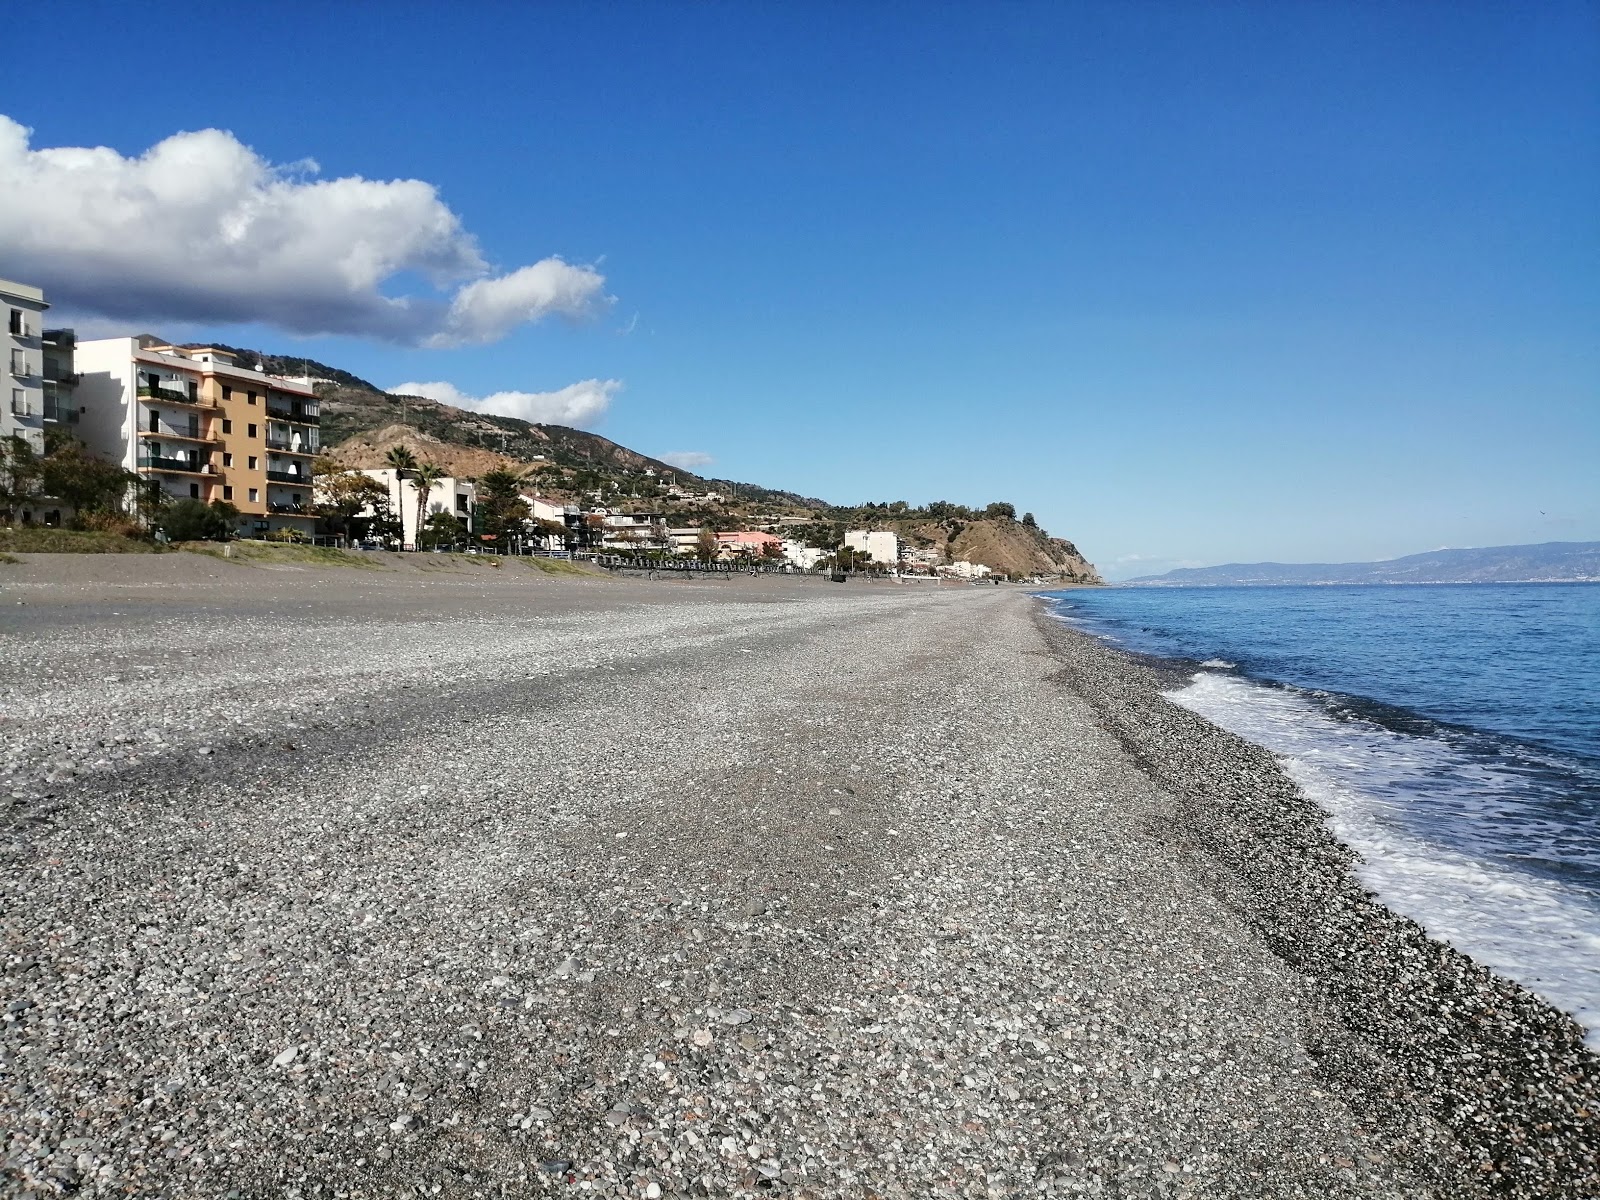 Foto von Ali Terme beach mit grauer kies Oberfläche